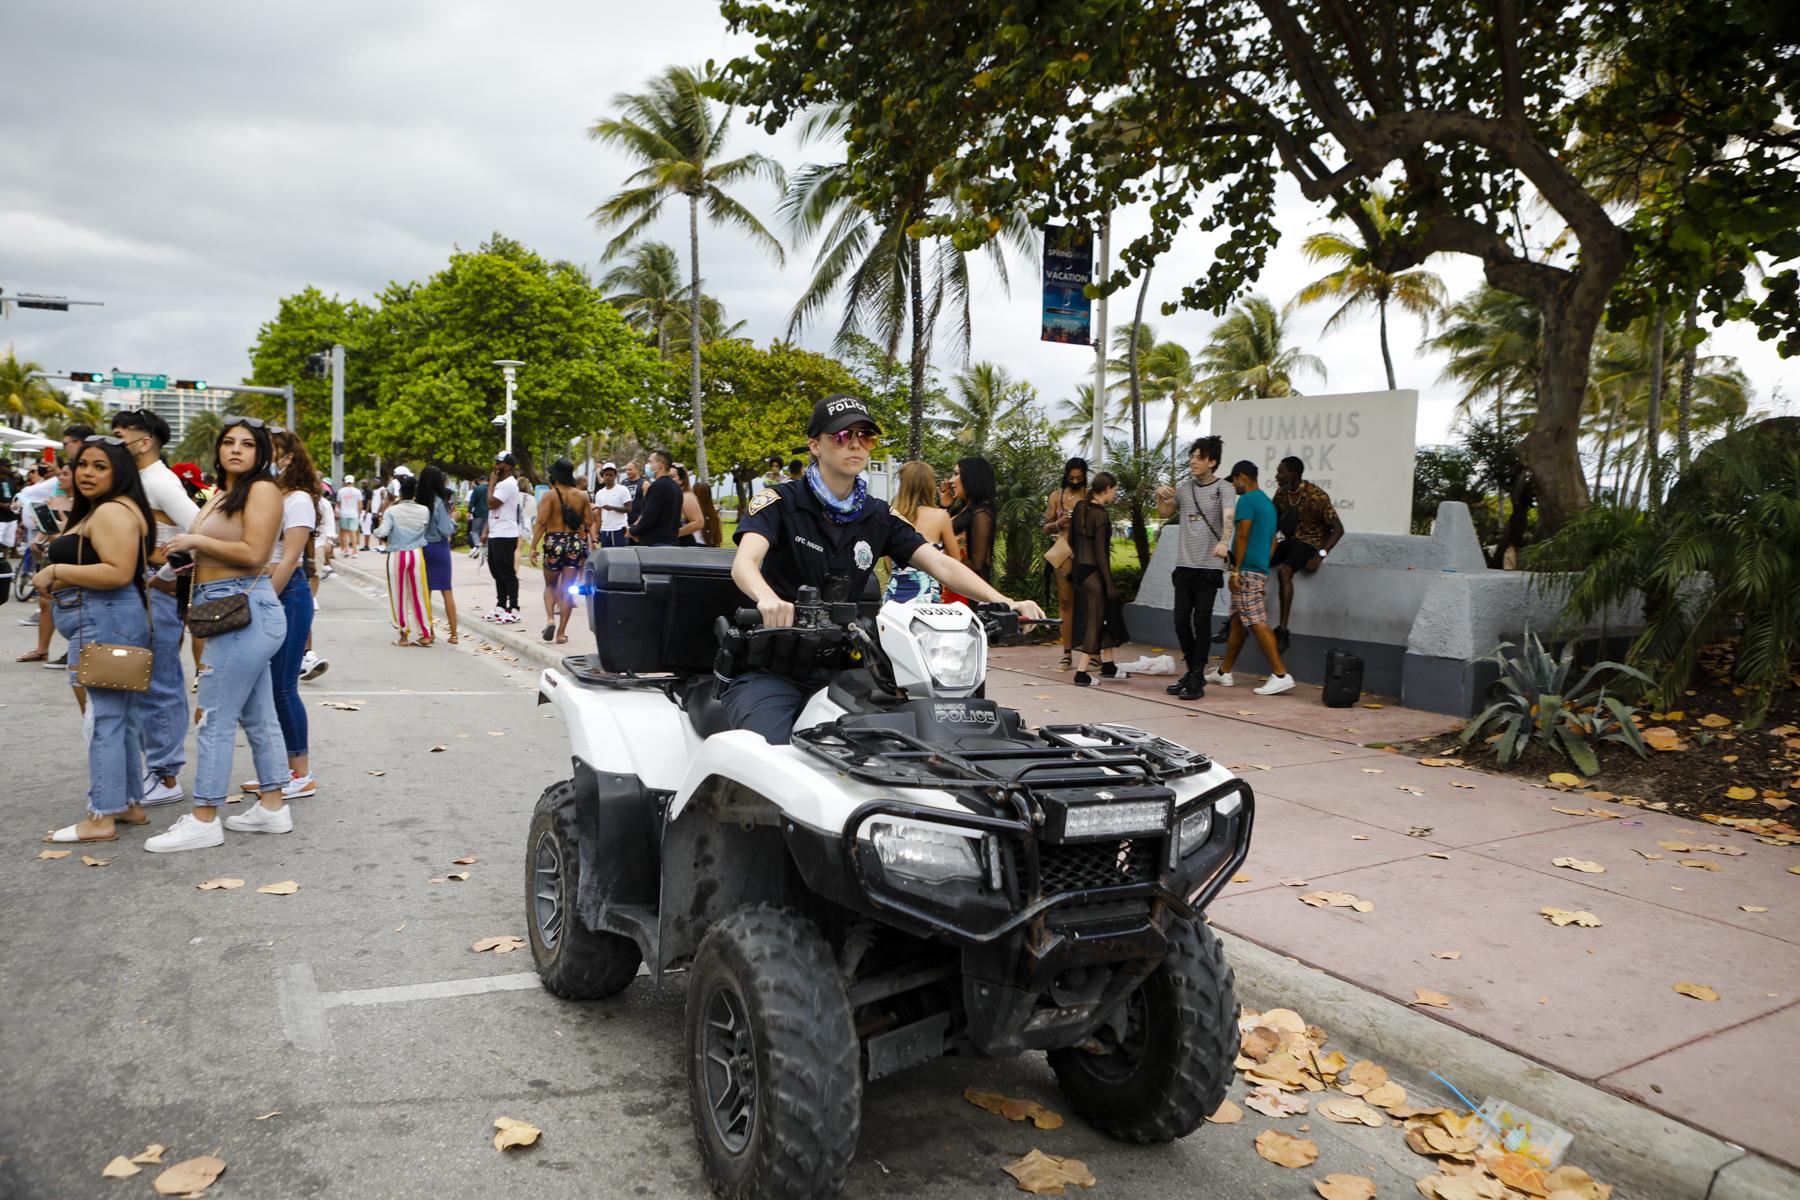 2021 - Spring Break @ Miami Beach - A Miami Beach police officer patrols the street in Miami...